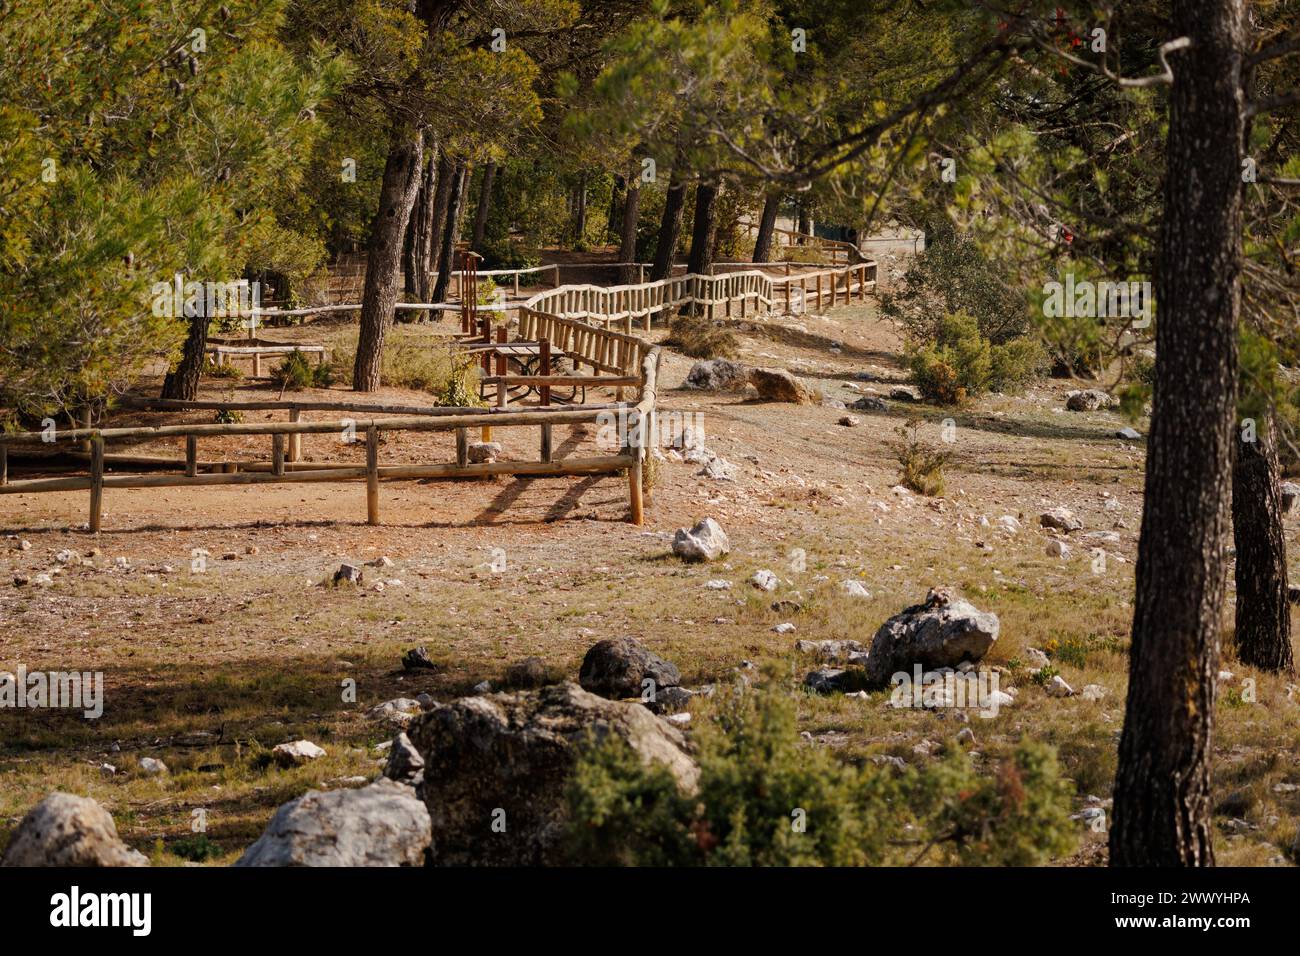 Landscape with picnic area in the natural area of San Antonio de Alcoy, Spain Stock Photo